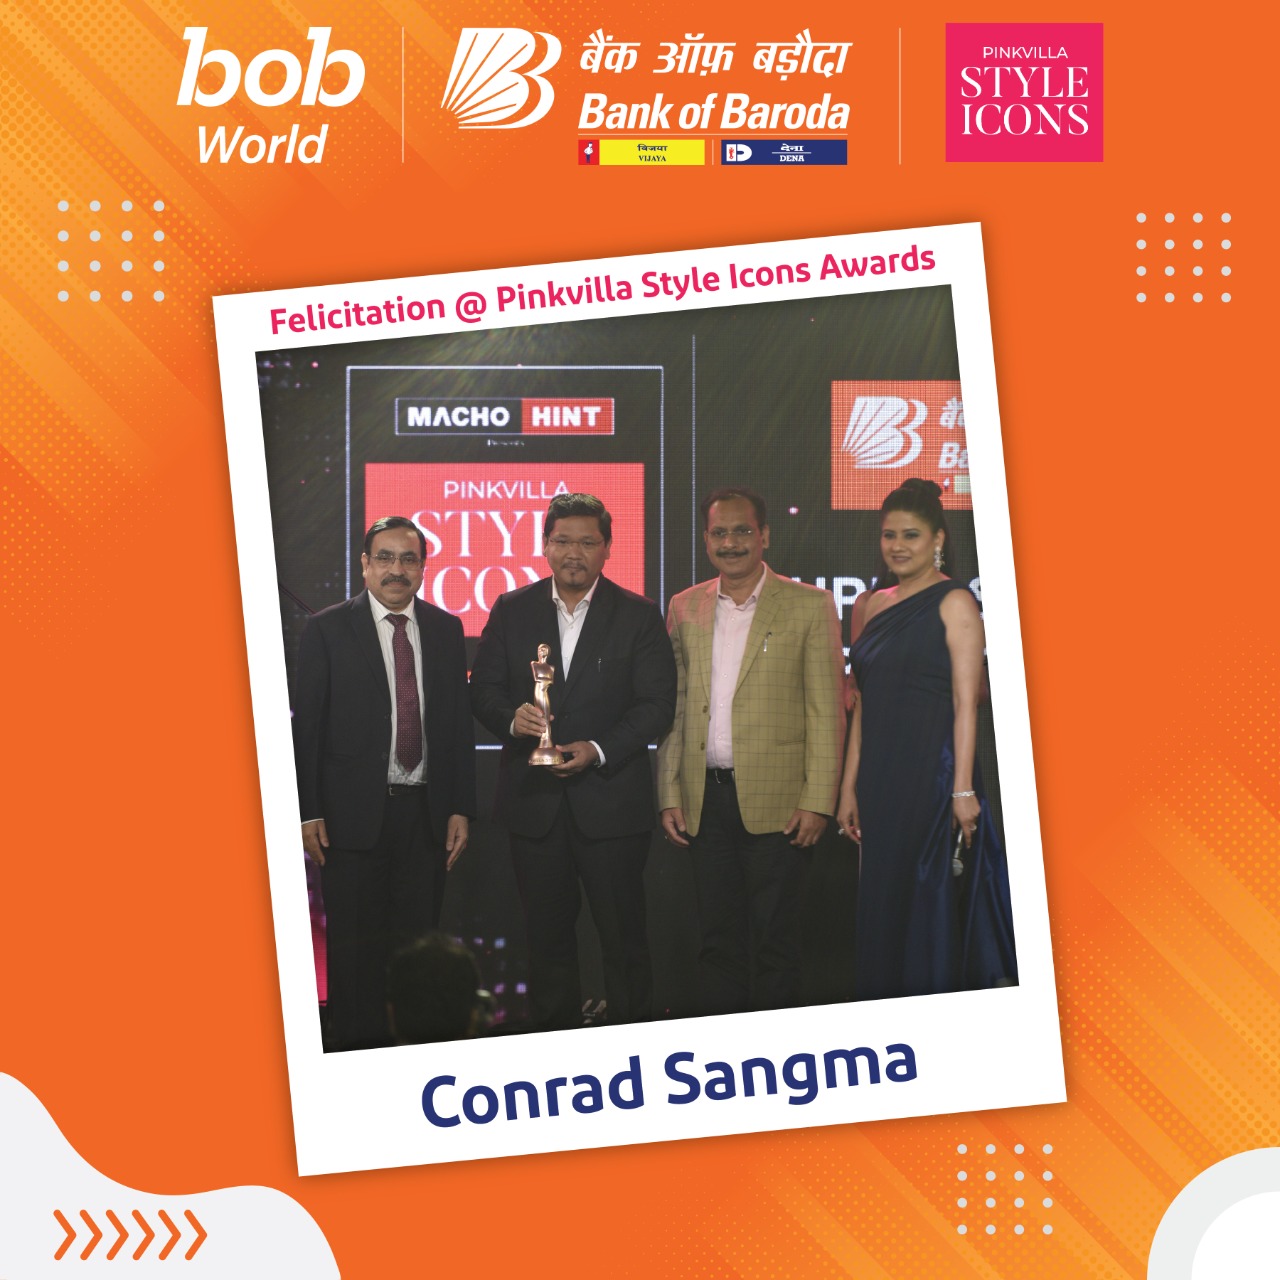  Pinkvilla Style Icons Awards: Shri Conrad Sangma wins 'Super Stylish Politician'